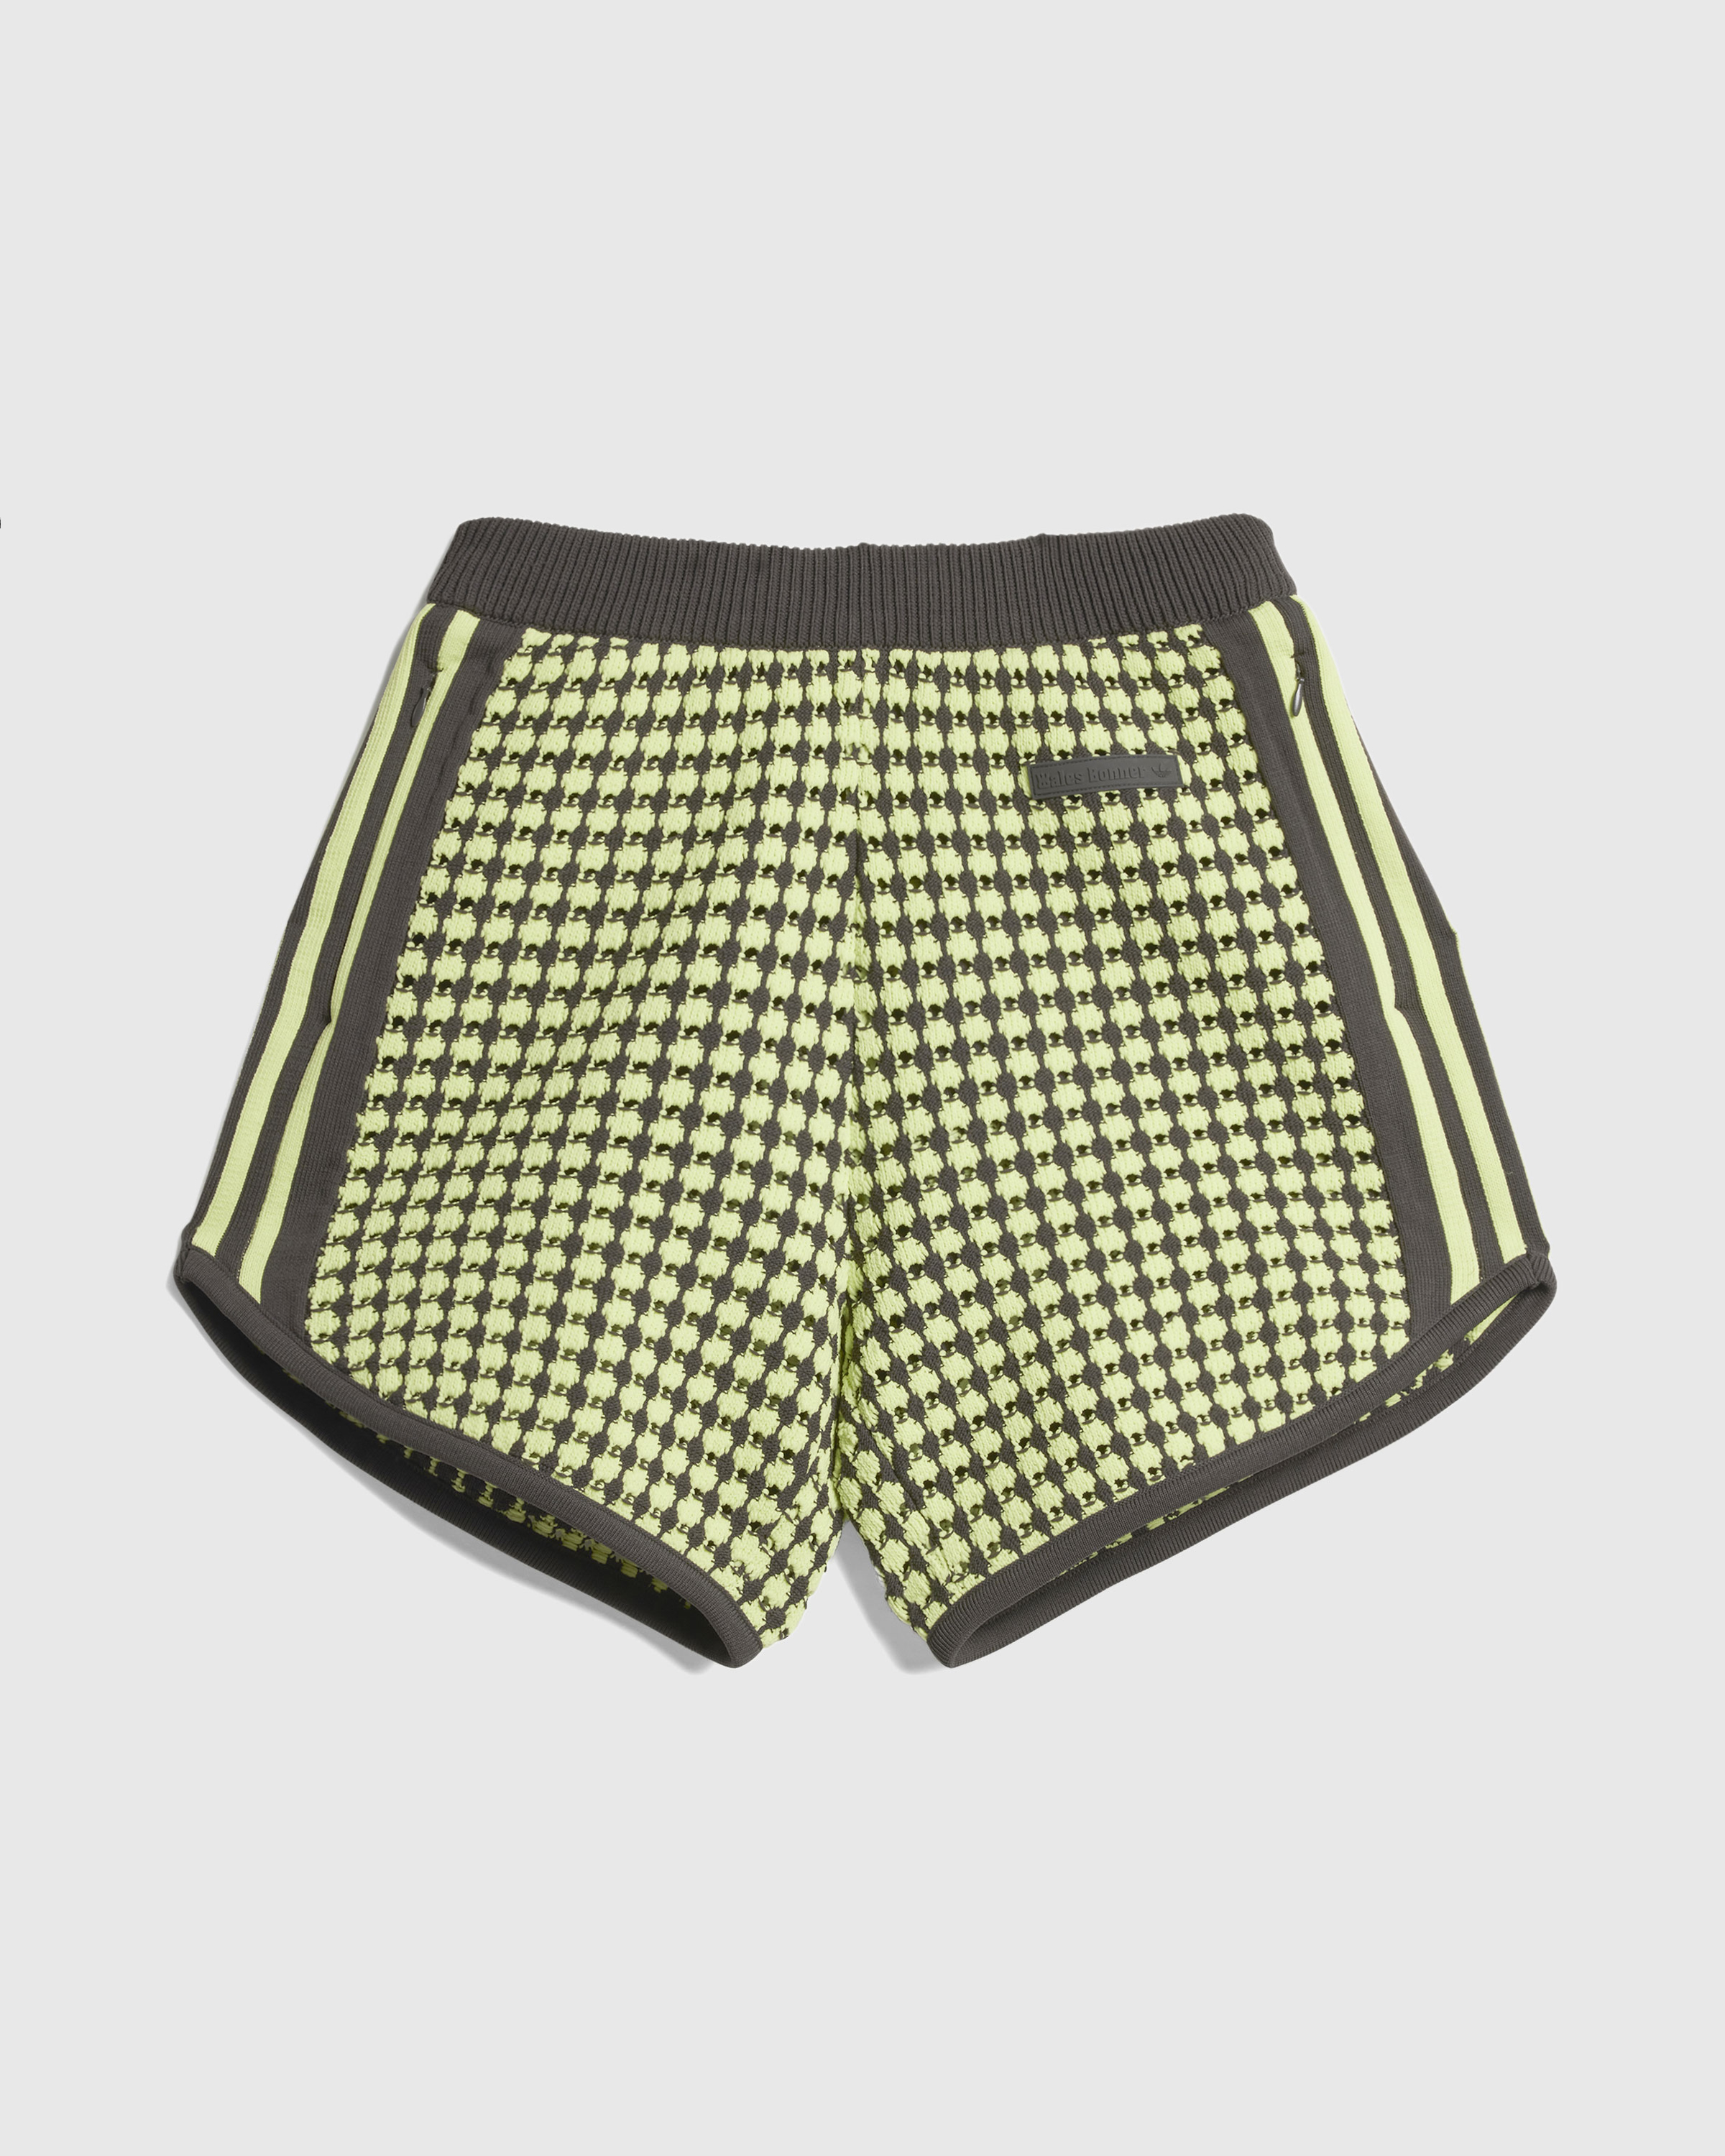 Adidas x Wales Bonner – Knit Shorts Semi Frozen Yellow/Night Brown - Short Cuts - Yellow - Image 1